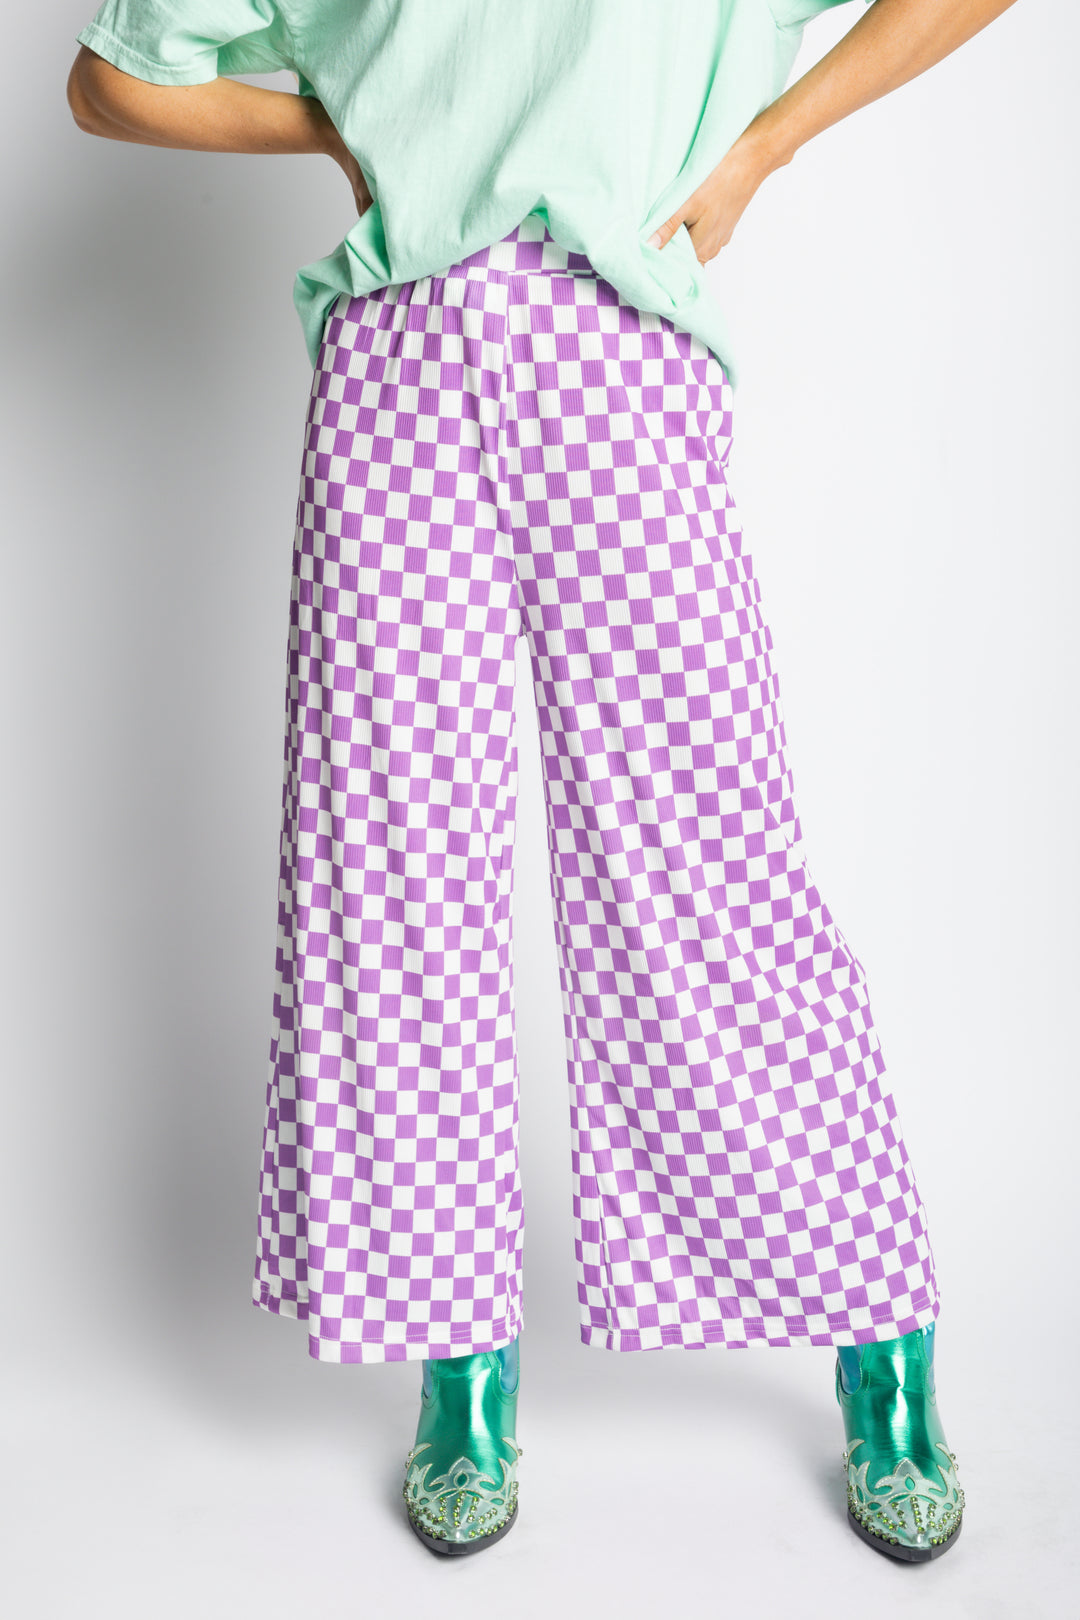 My Reputation Checkered Pants - Lilac [S-3X]